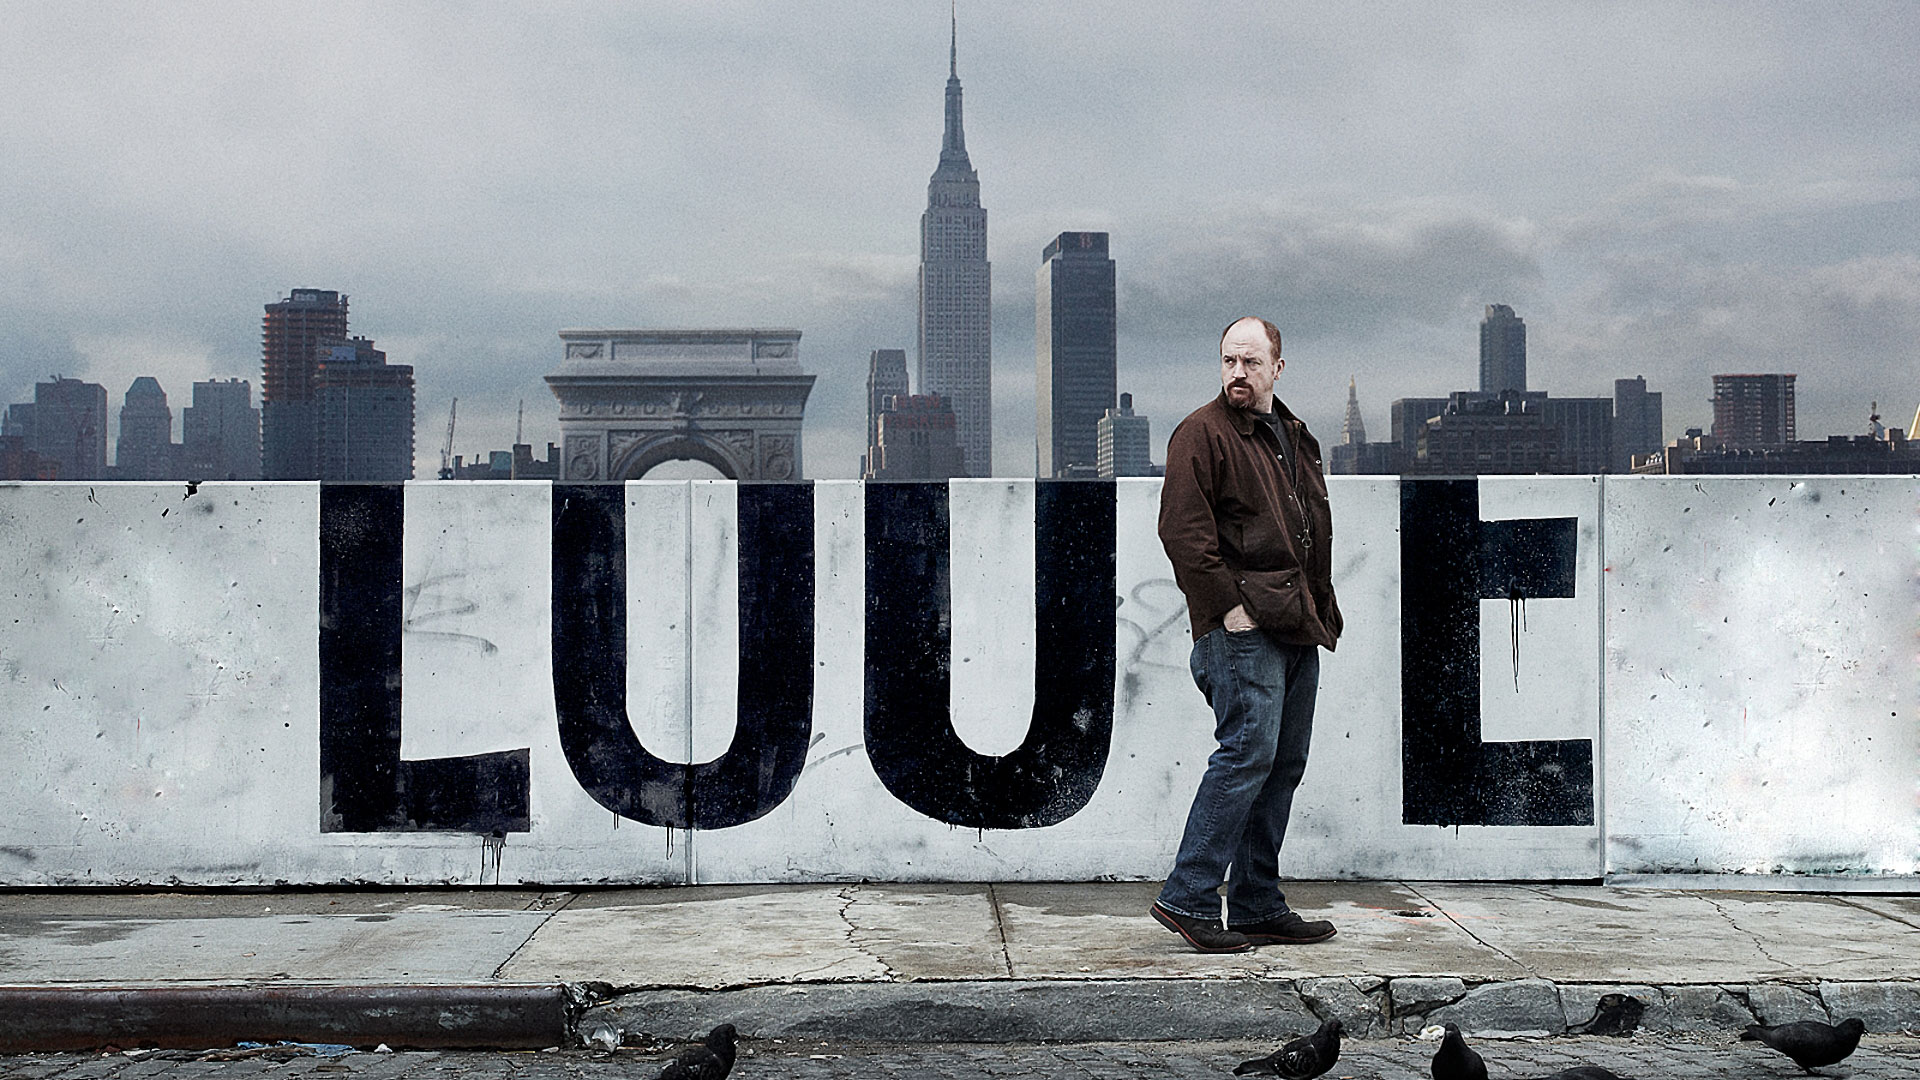 Louie (2010) Wallpapers